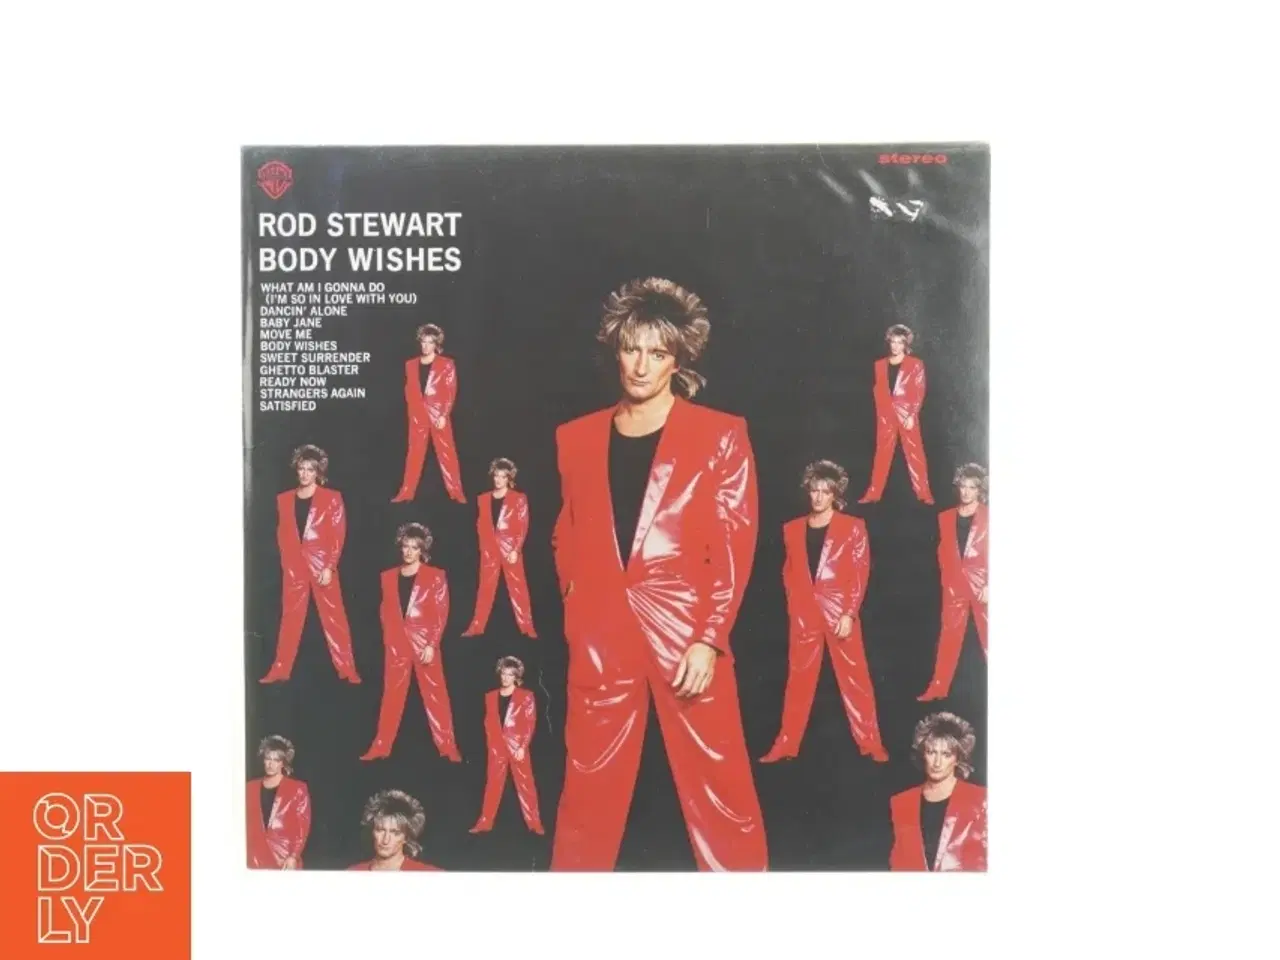 Billede 1 - Vinylplade Rod Stewart body wishes fra Warner Brothers (str. 30 cm)